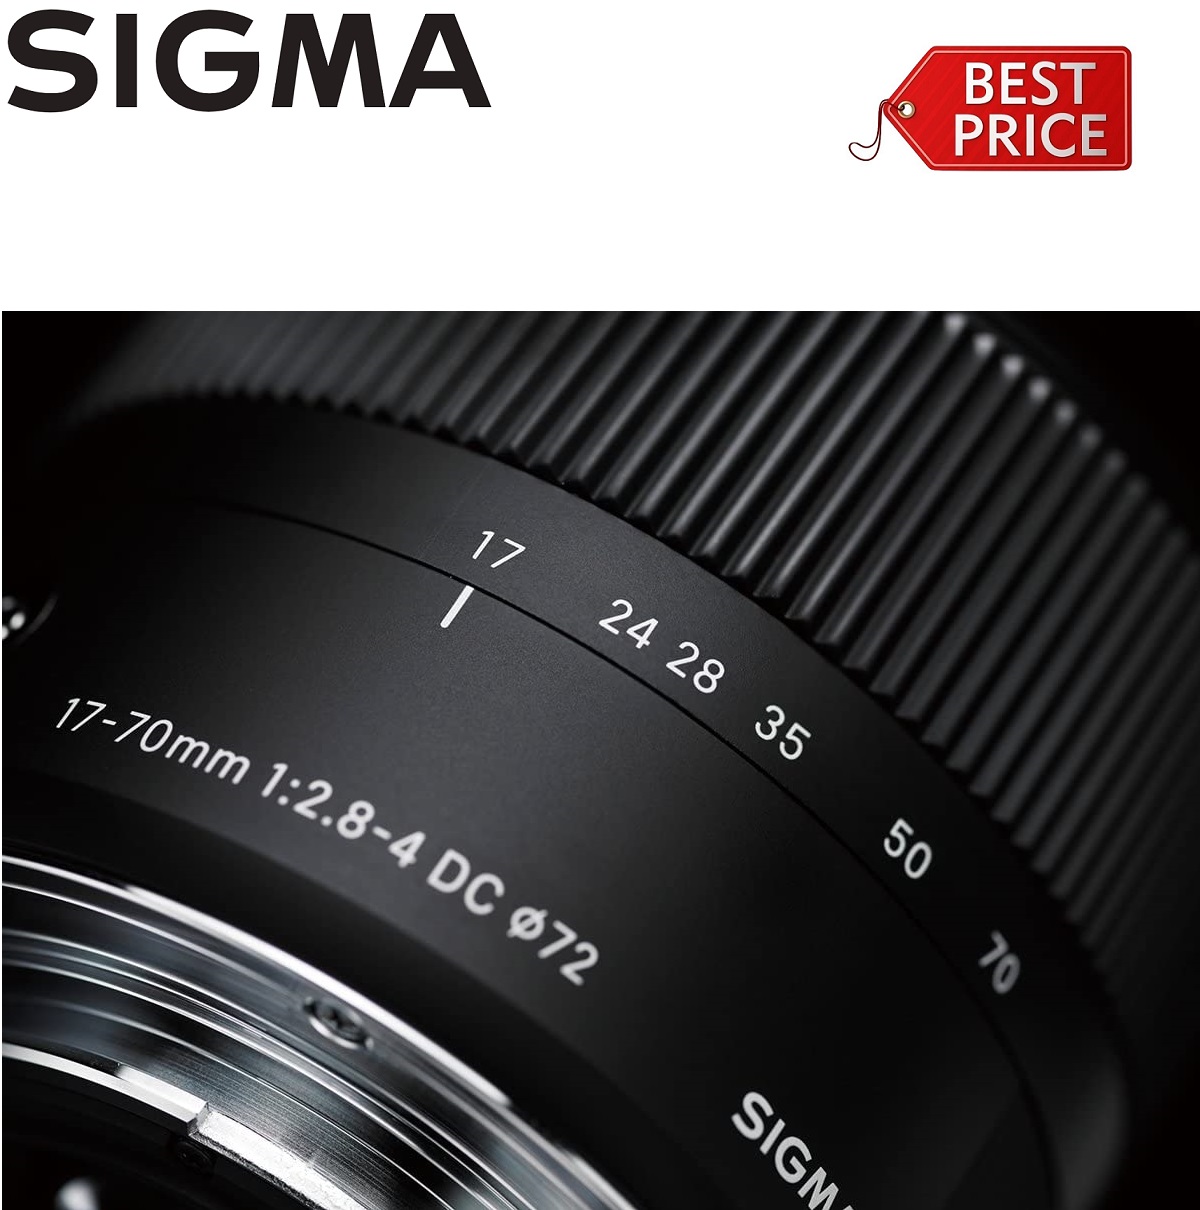 Sigma 17-70mm f2.8-4 DC Macro HSM Lens - Pentax Fit